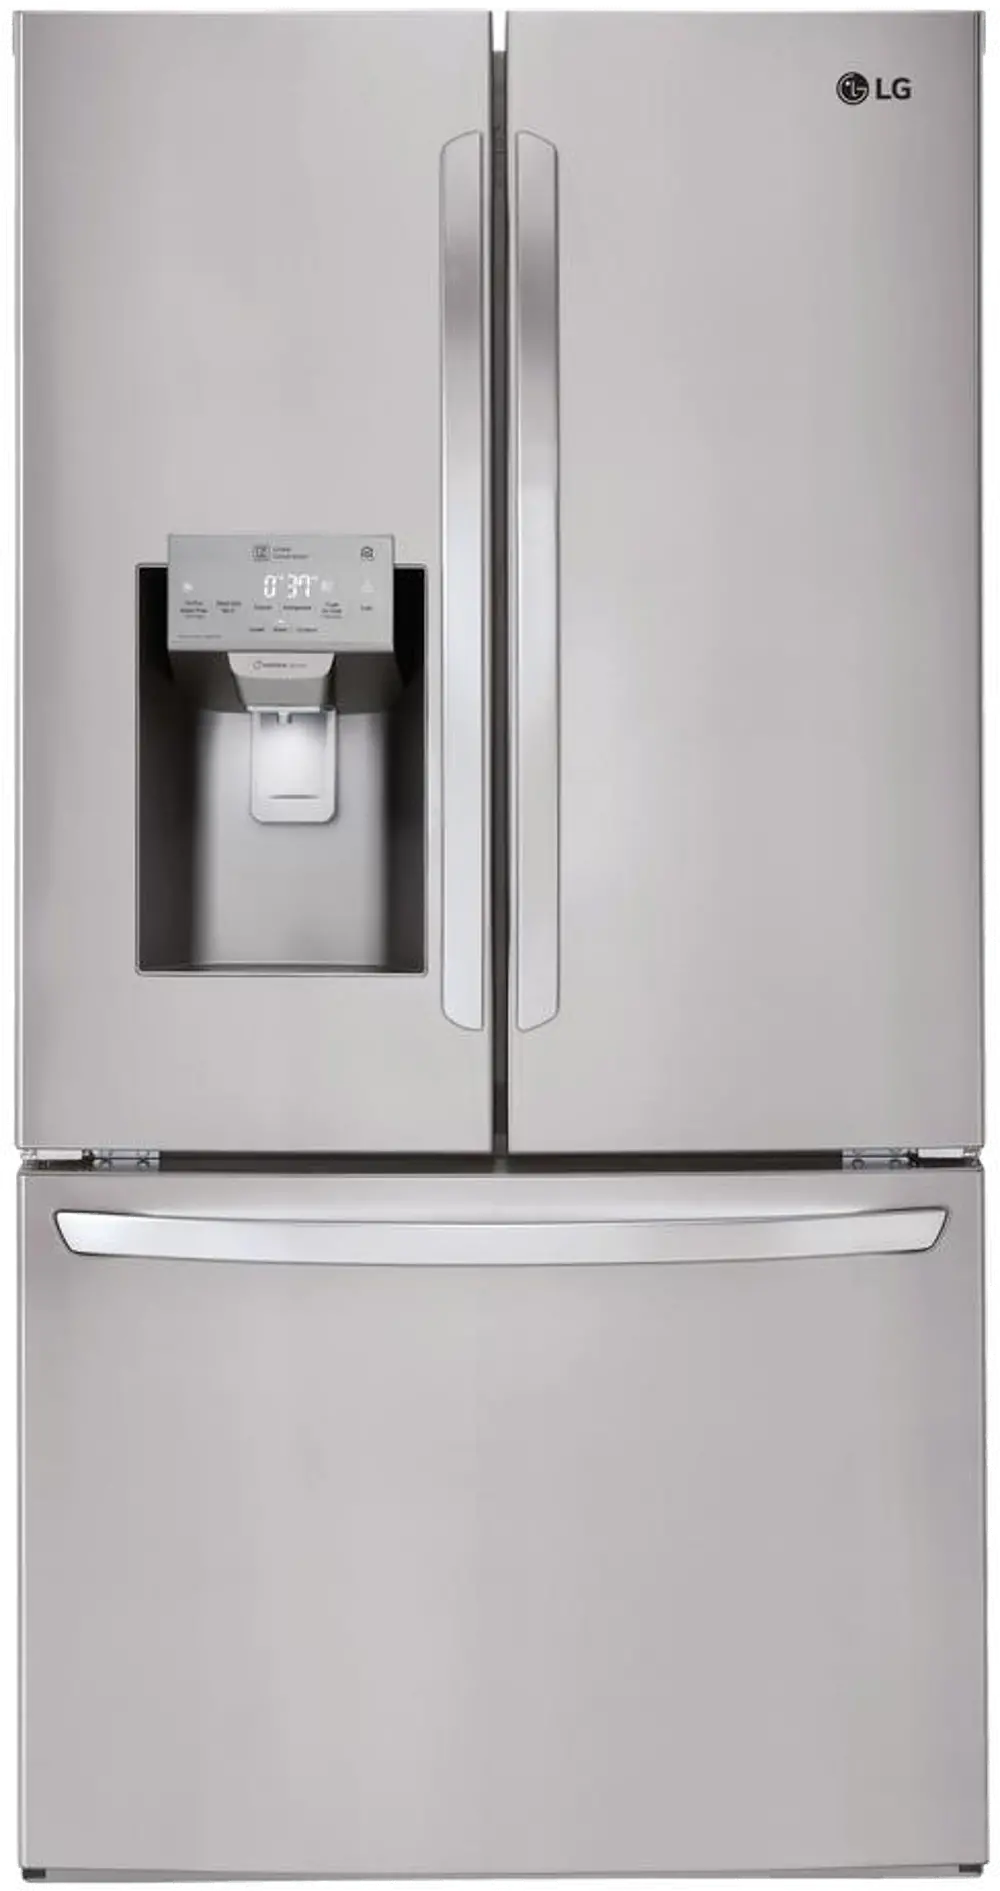 LFXS28968S LG 27.9 cu ft French Door Refrigerator - Stainless Steel-1